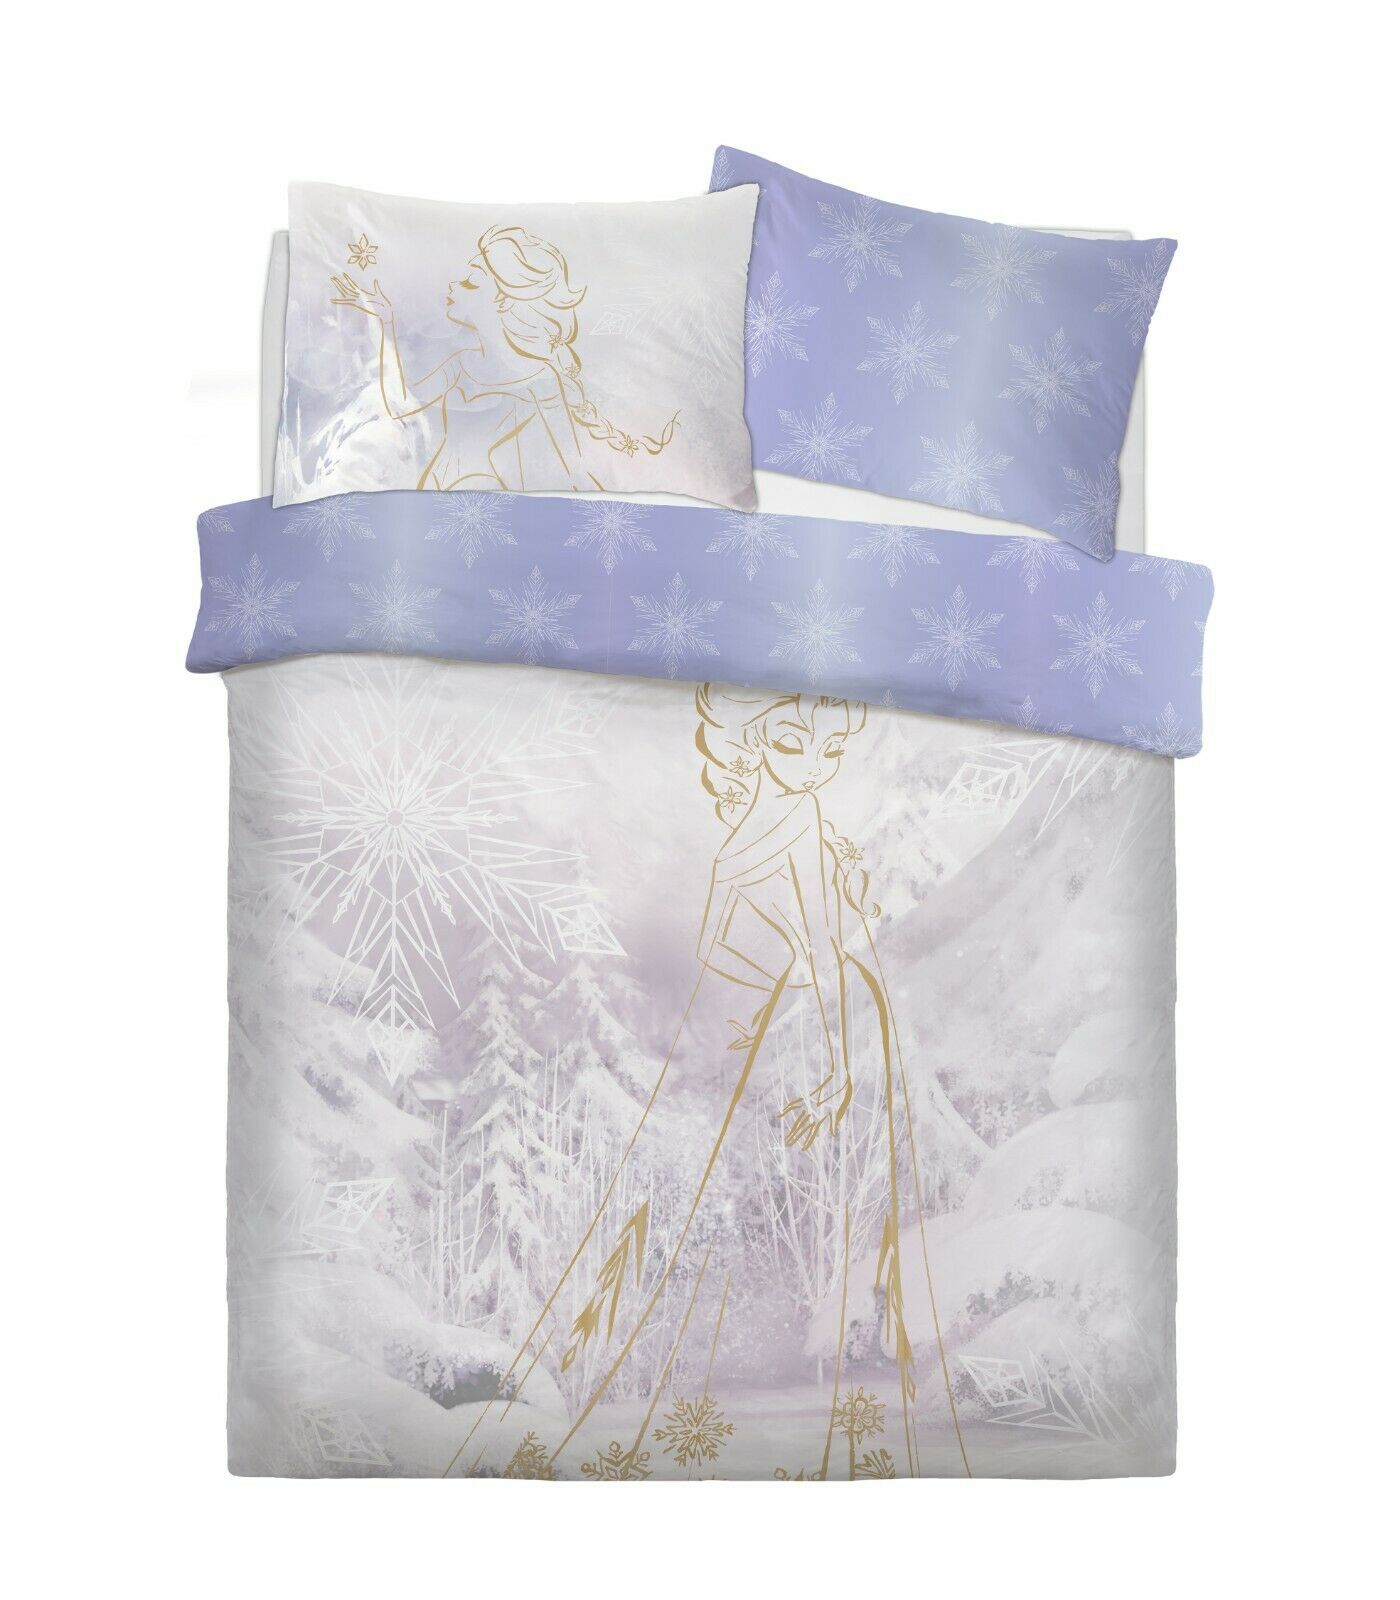 Details About Disney Official Frozen Rose Gold Duvet Quilt Cover Pillowcase Bedding Set